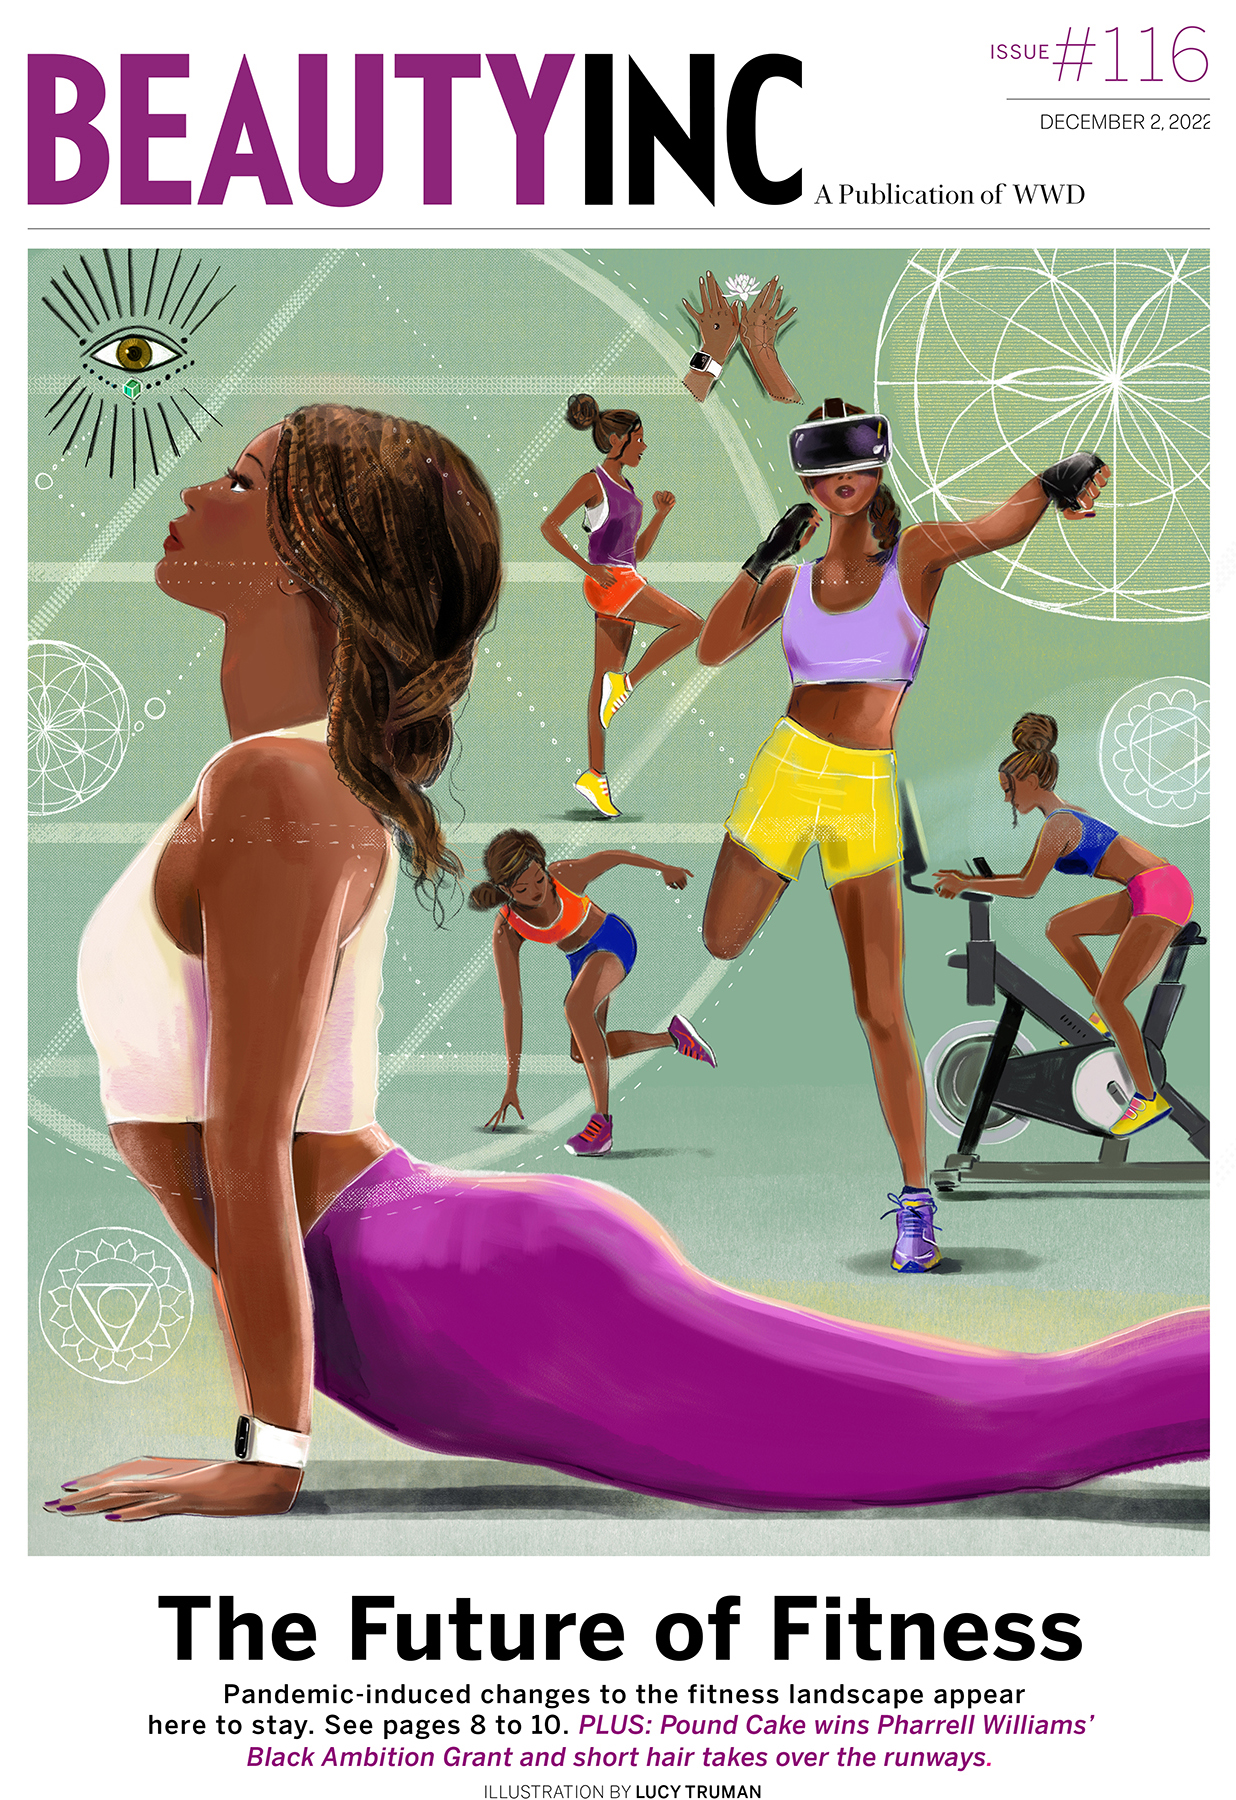 WWD Inside Beauty Inc Workout health Illustration Watercolor Pencil Color Editorial Illustrator (1)